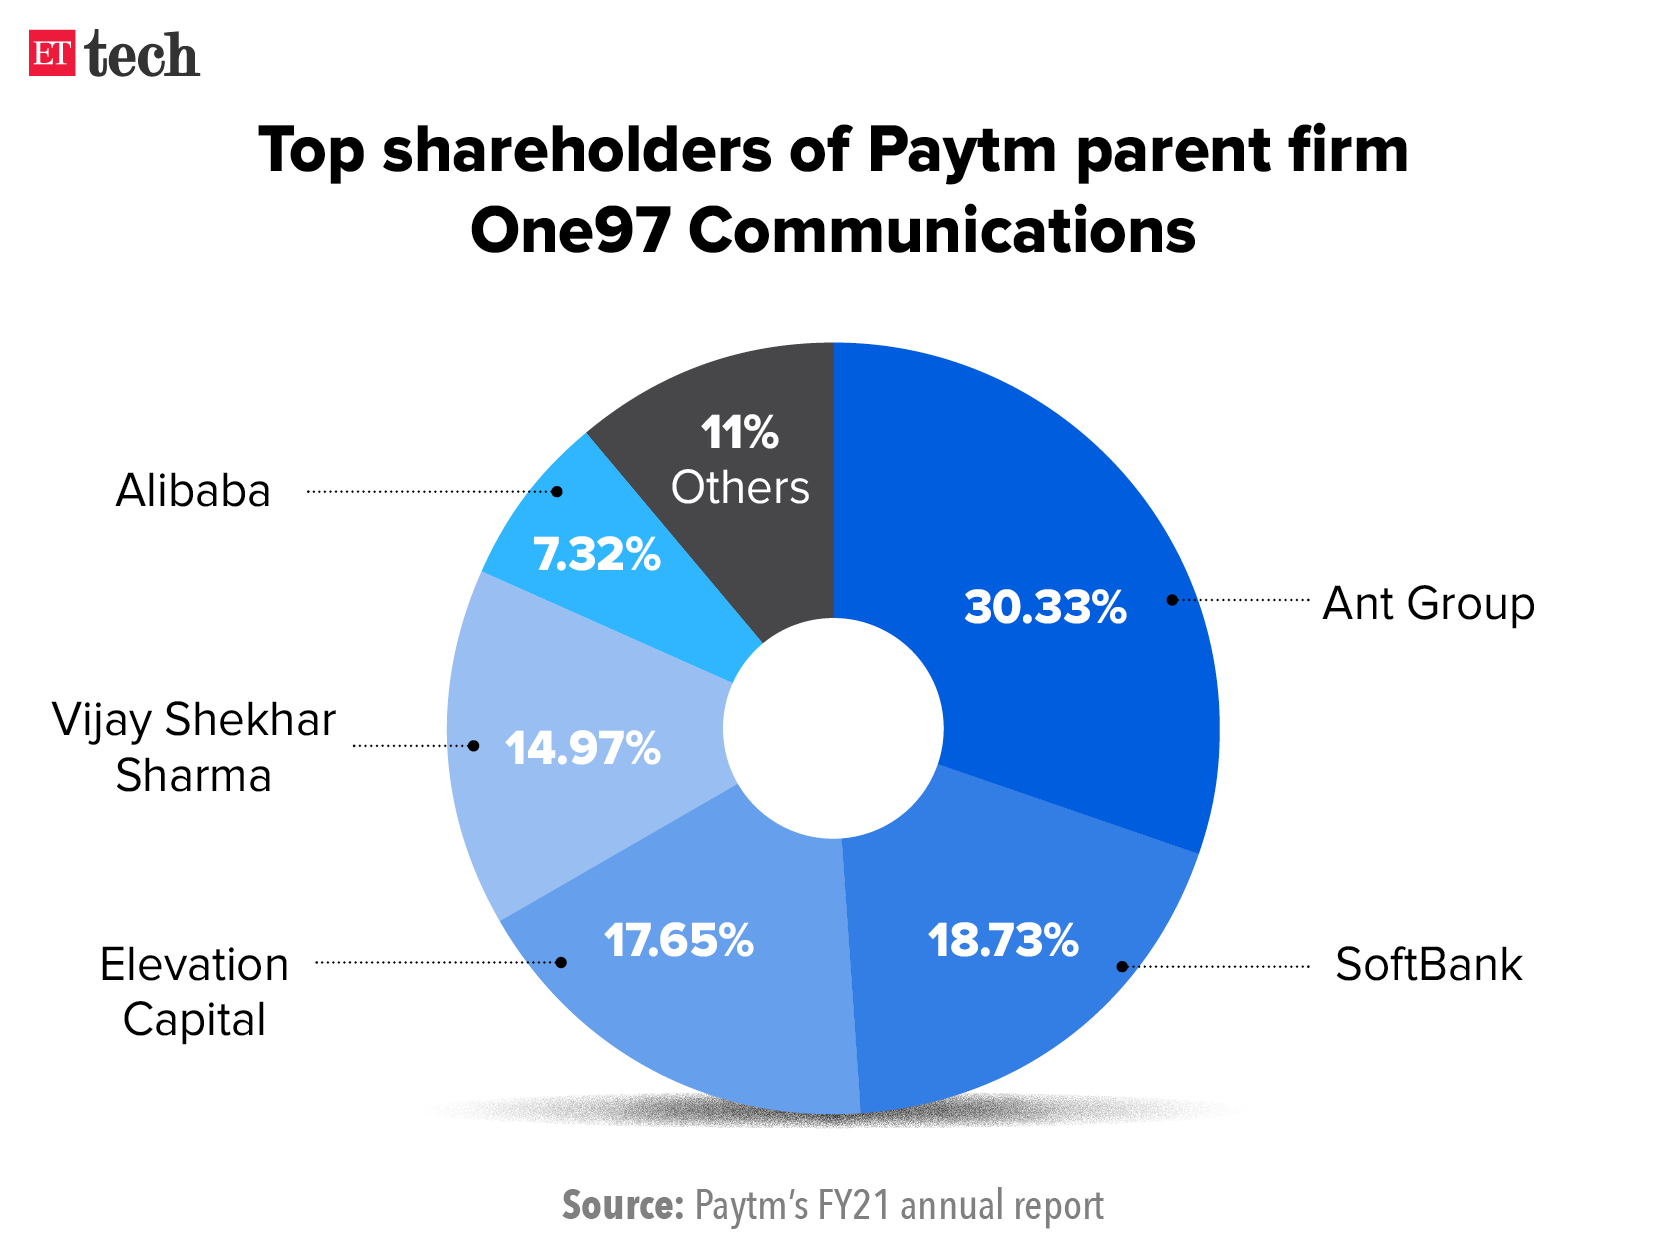 Top shareholders of Paytm